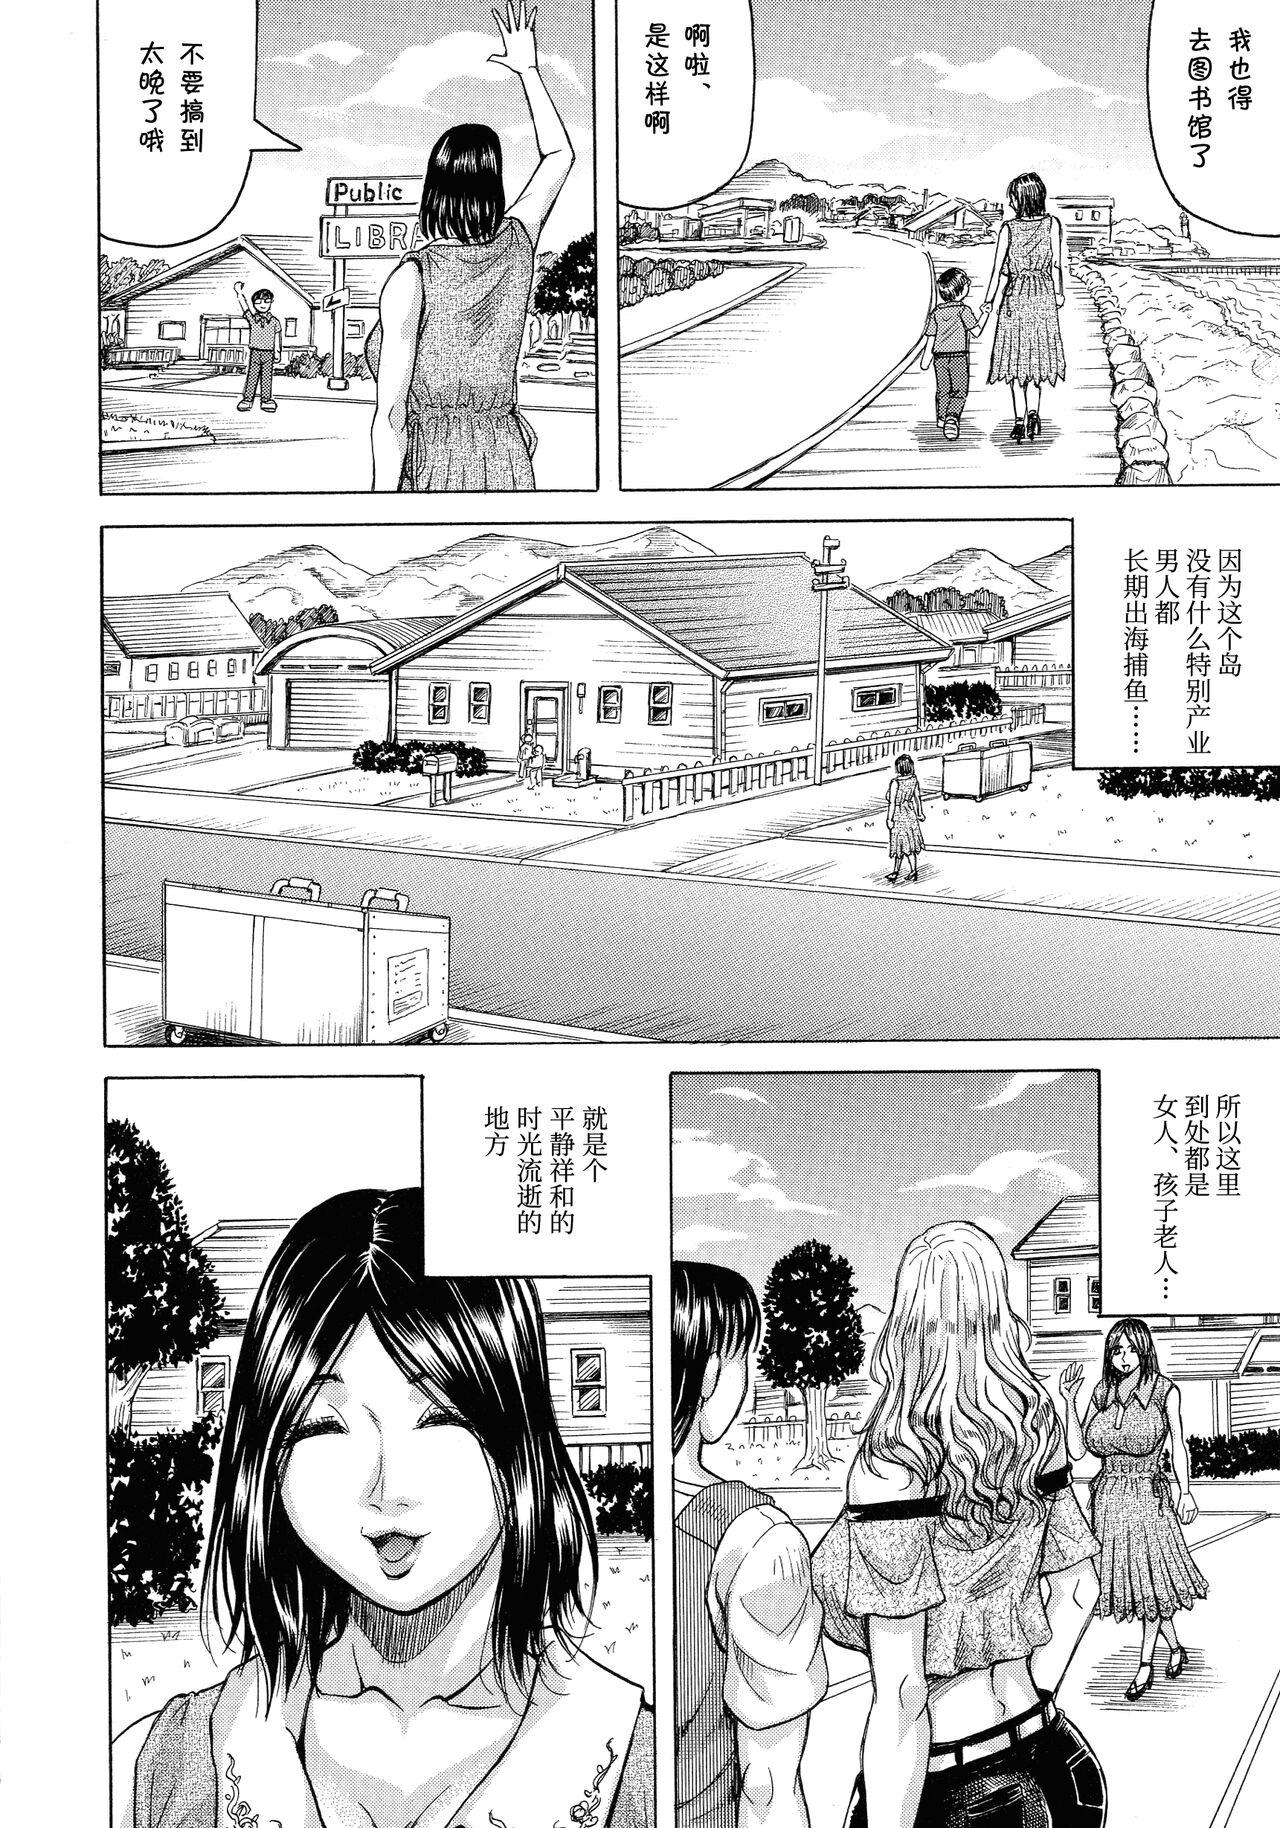 Home Hamegaki x Yaritsuma Juicy - Page 6